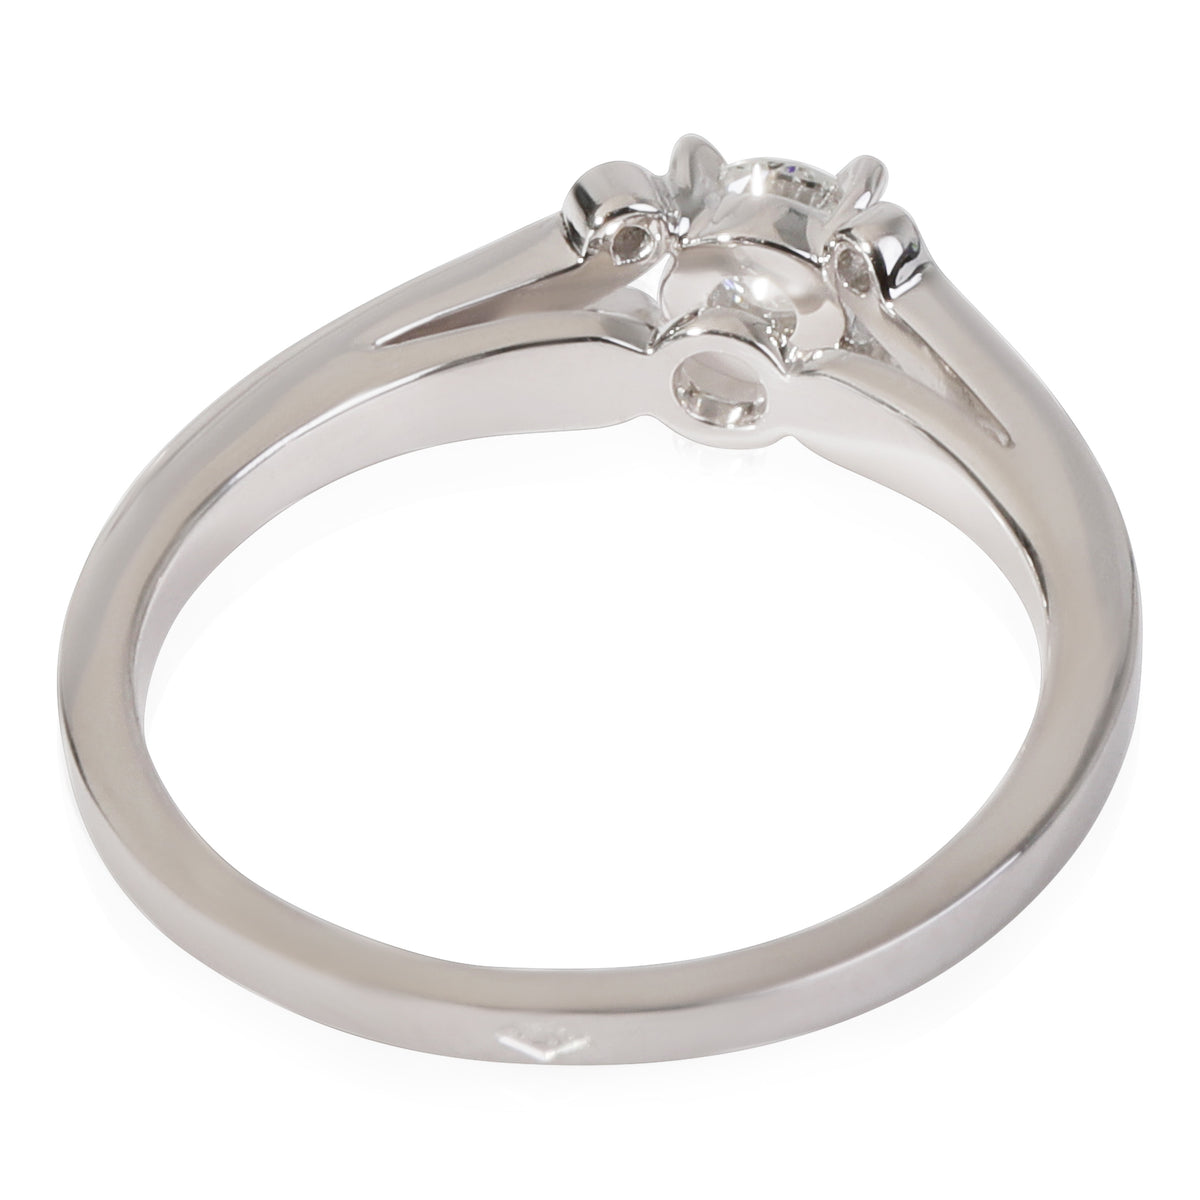 Cartier Ballerine Diamond Engagement Ring in Platinum F VVS1 0.27 CT